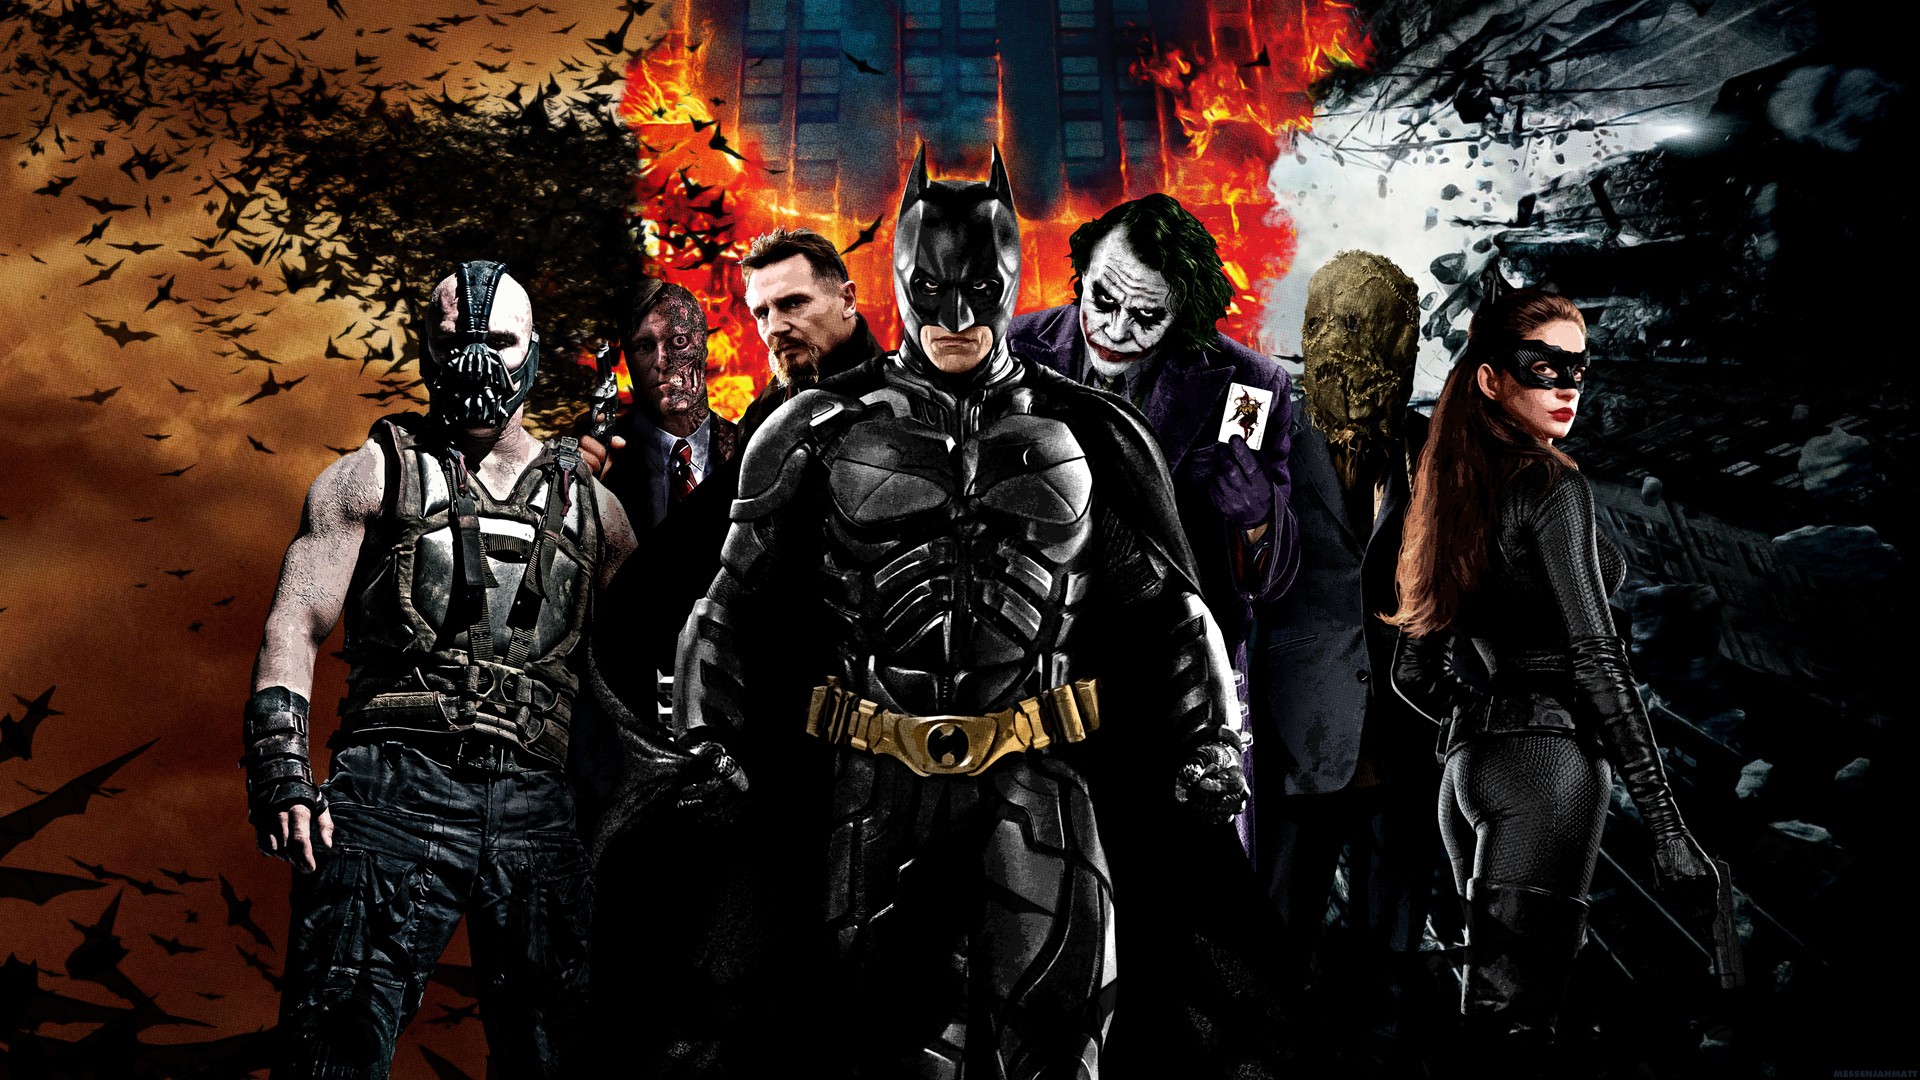 Joker Catwoman Liam Neeson Anne Hathaway Movies Trilogy Collage Christian Bale Batman Begins Superhe 1920x1080